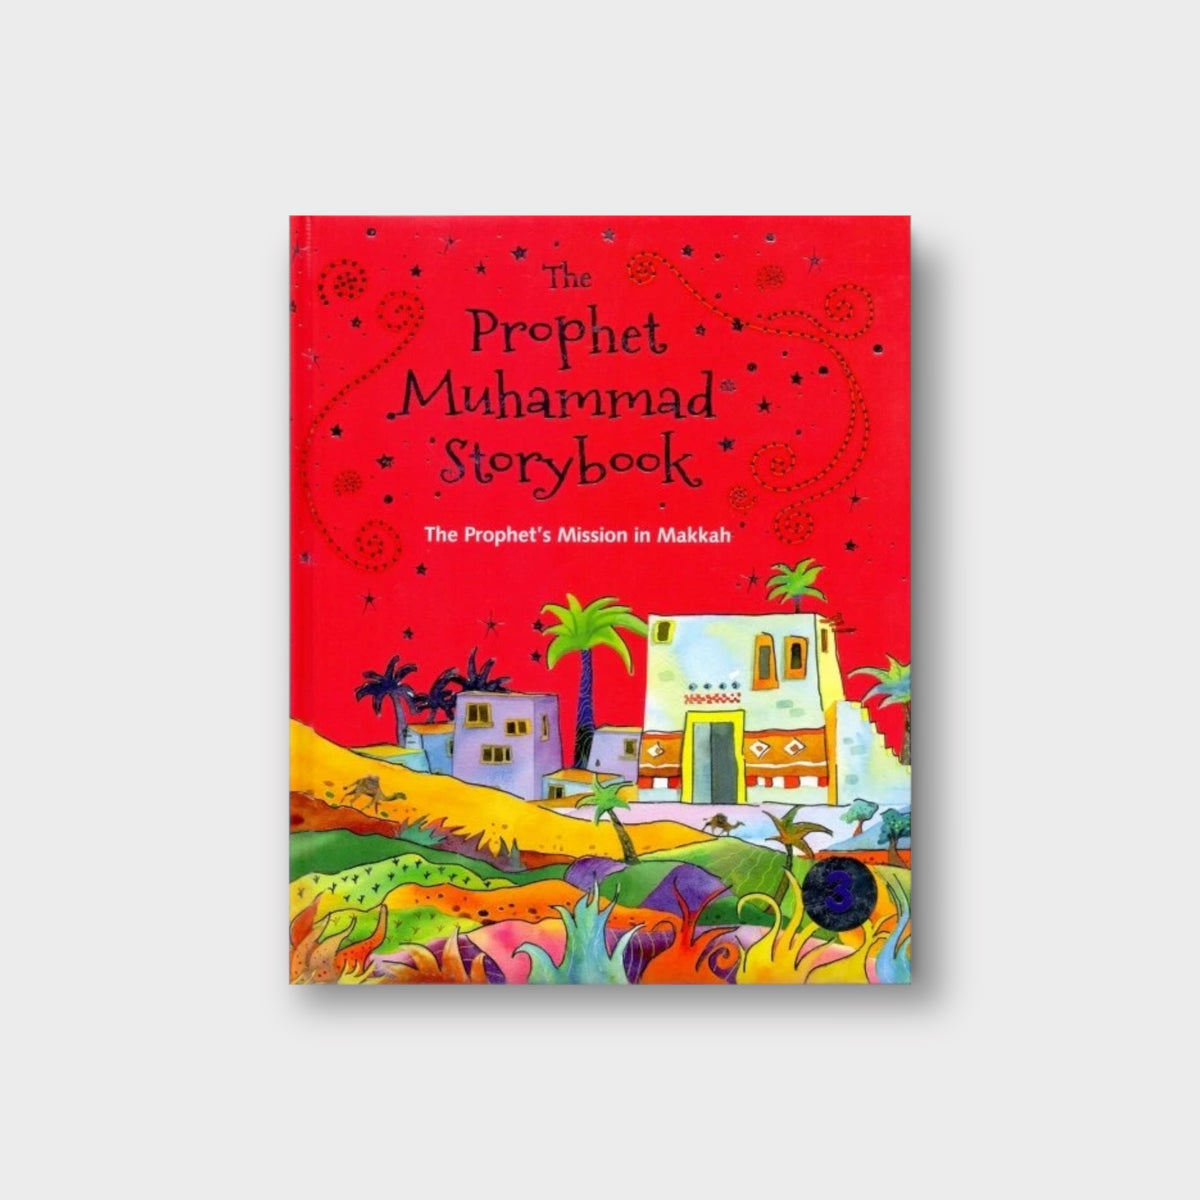 The Prophet Muhammad Storybook